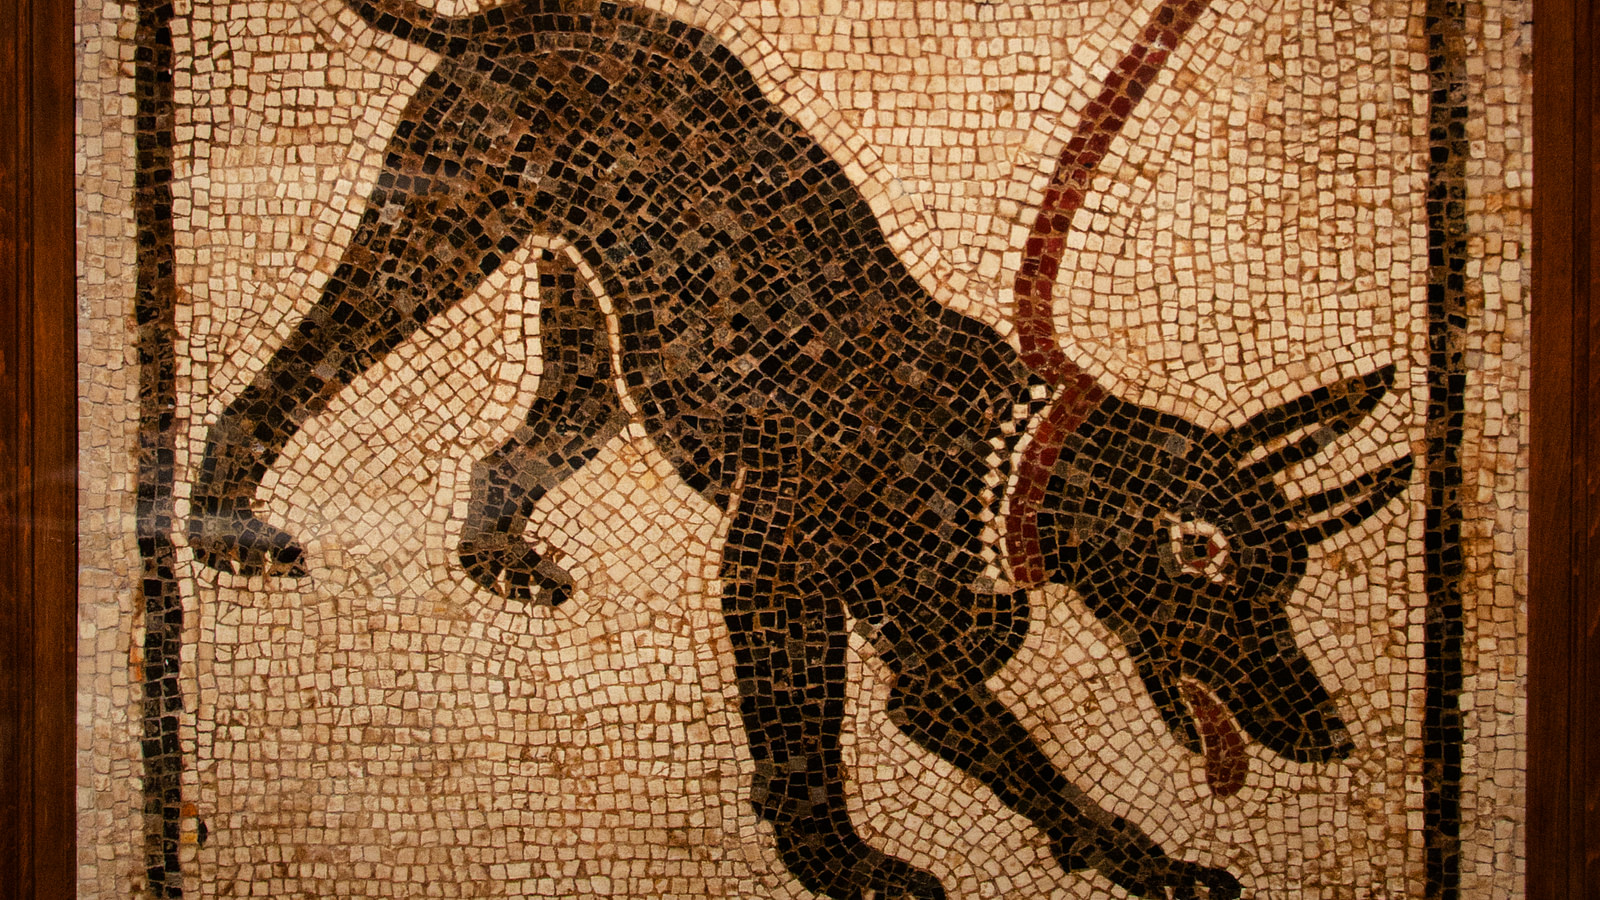 ancient greek chariots war dogs